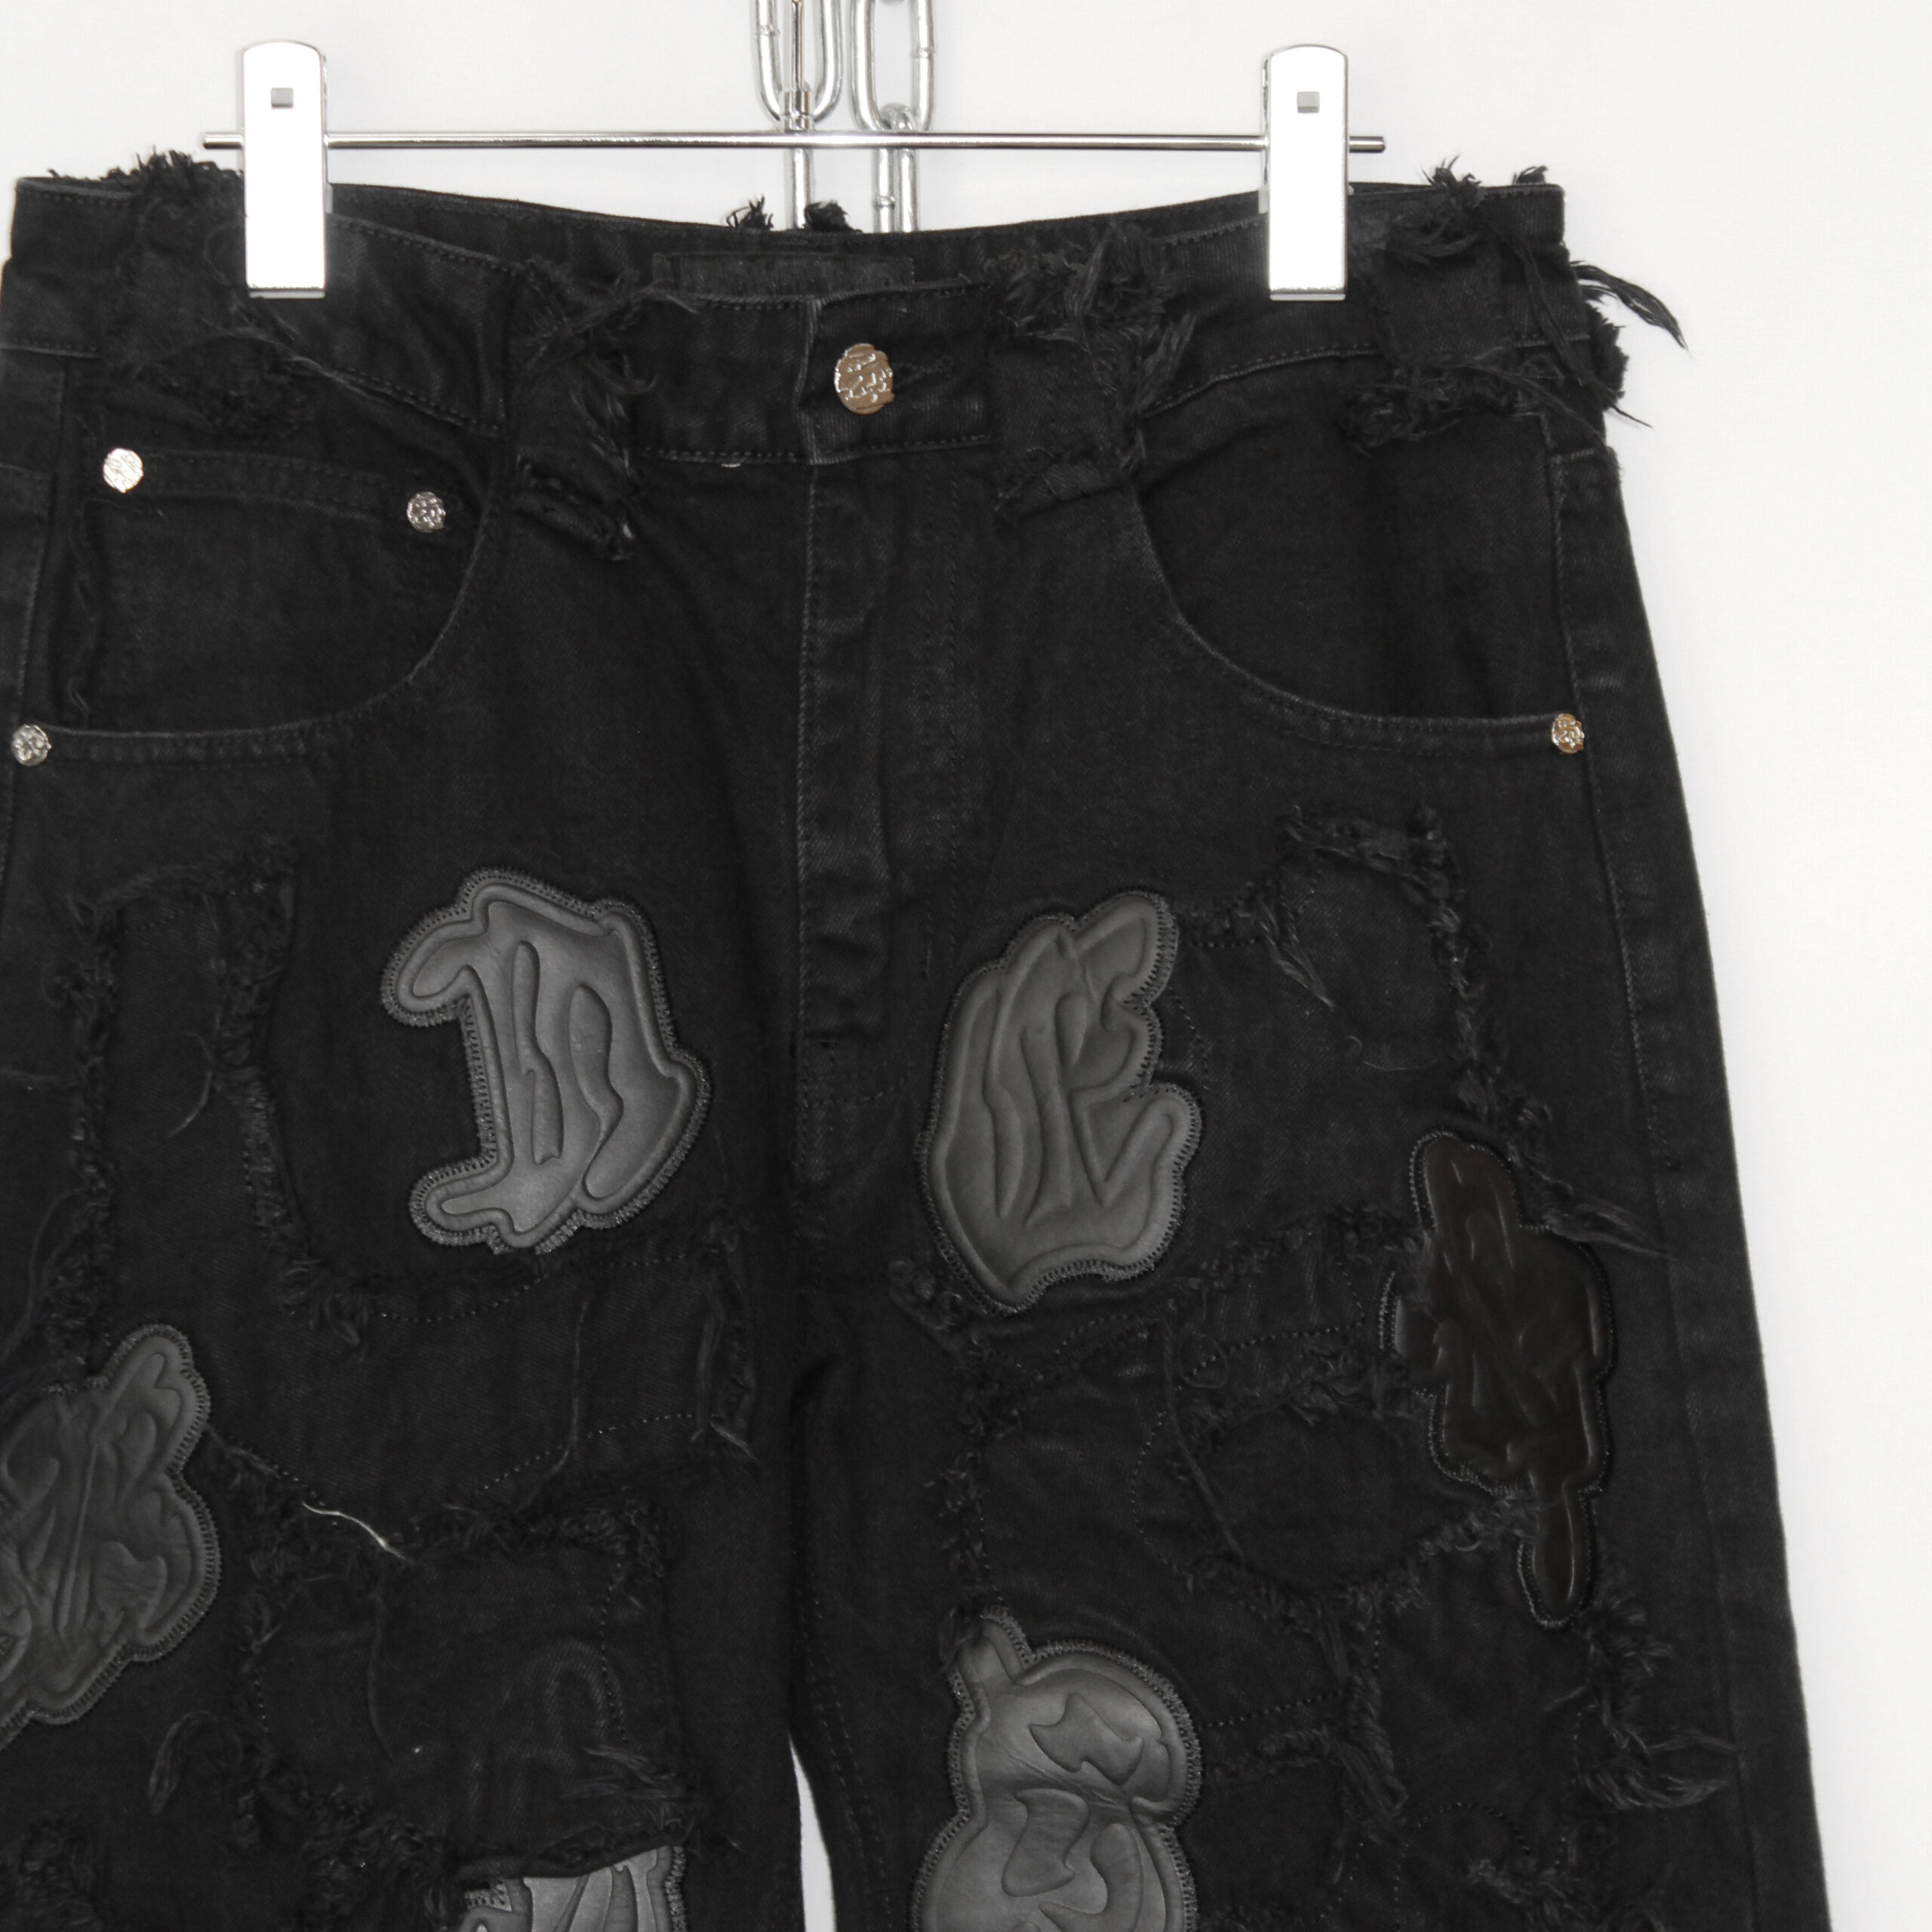 Full Black Definitive Jeans